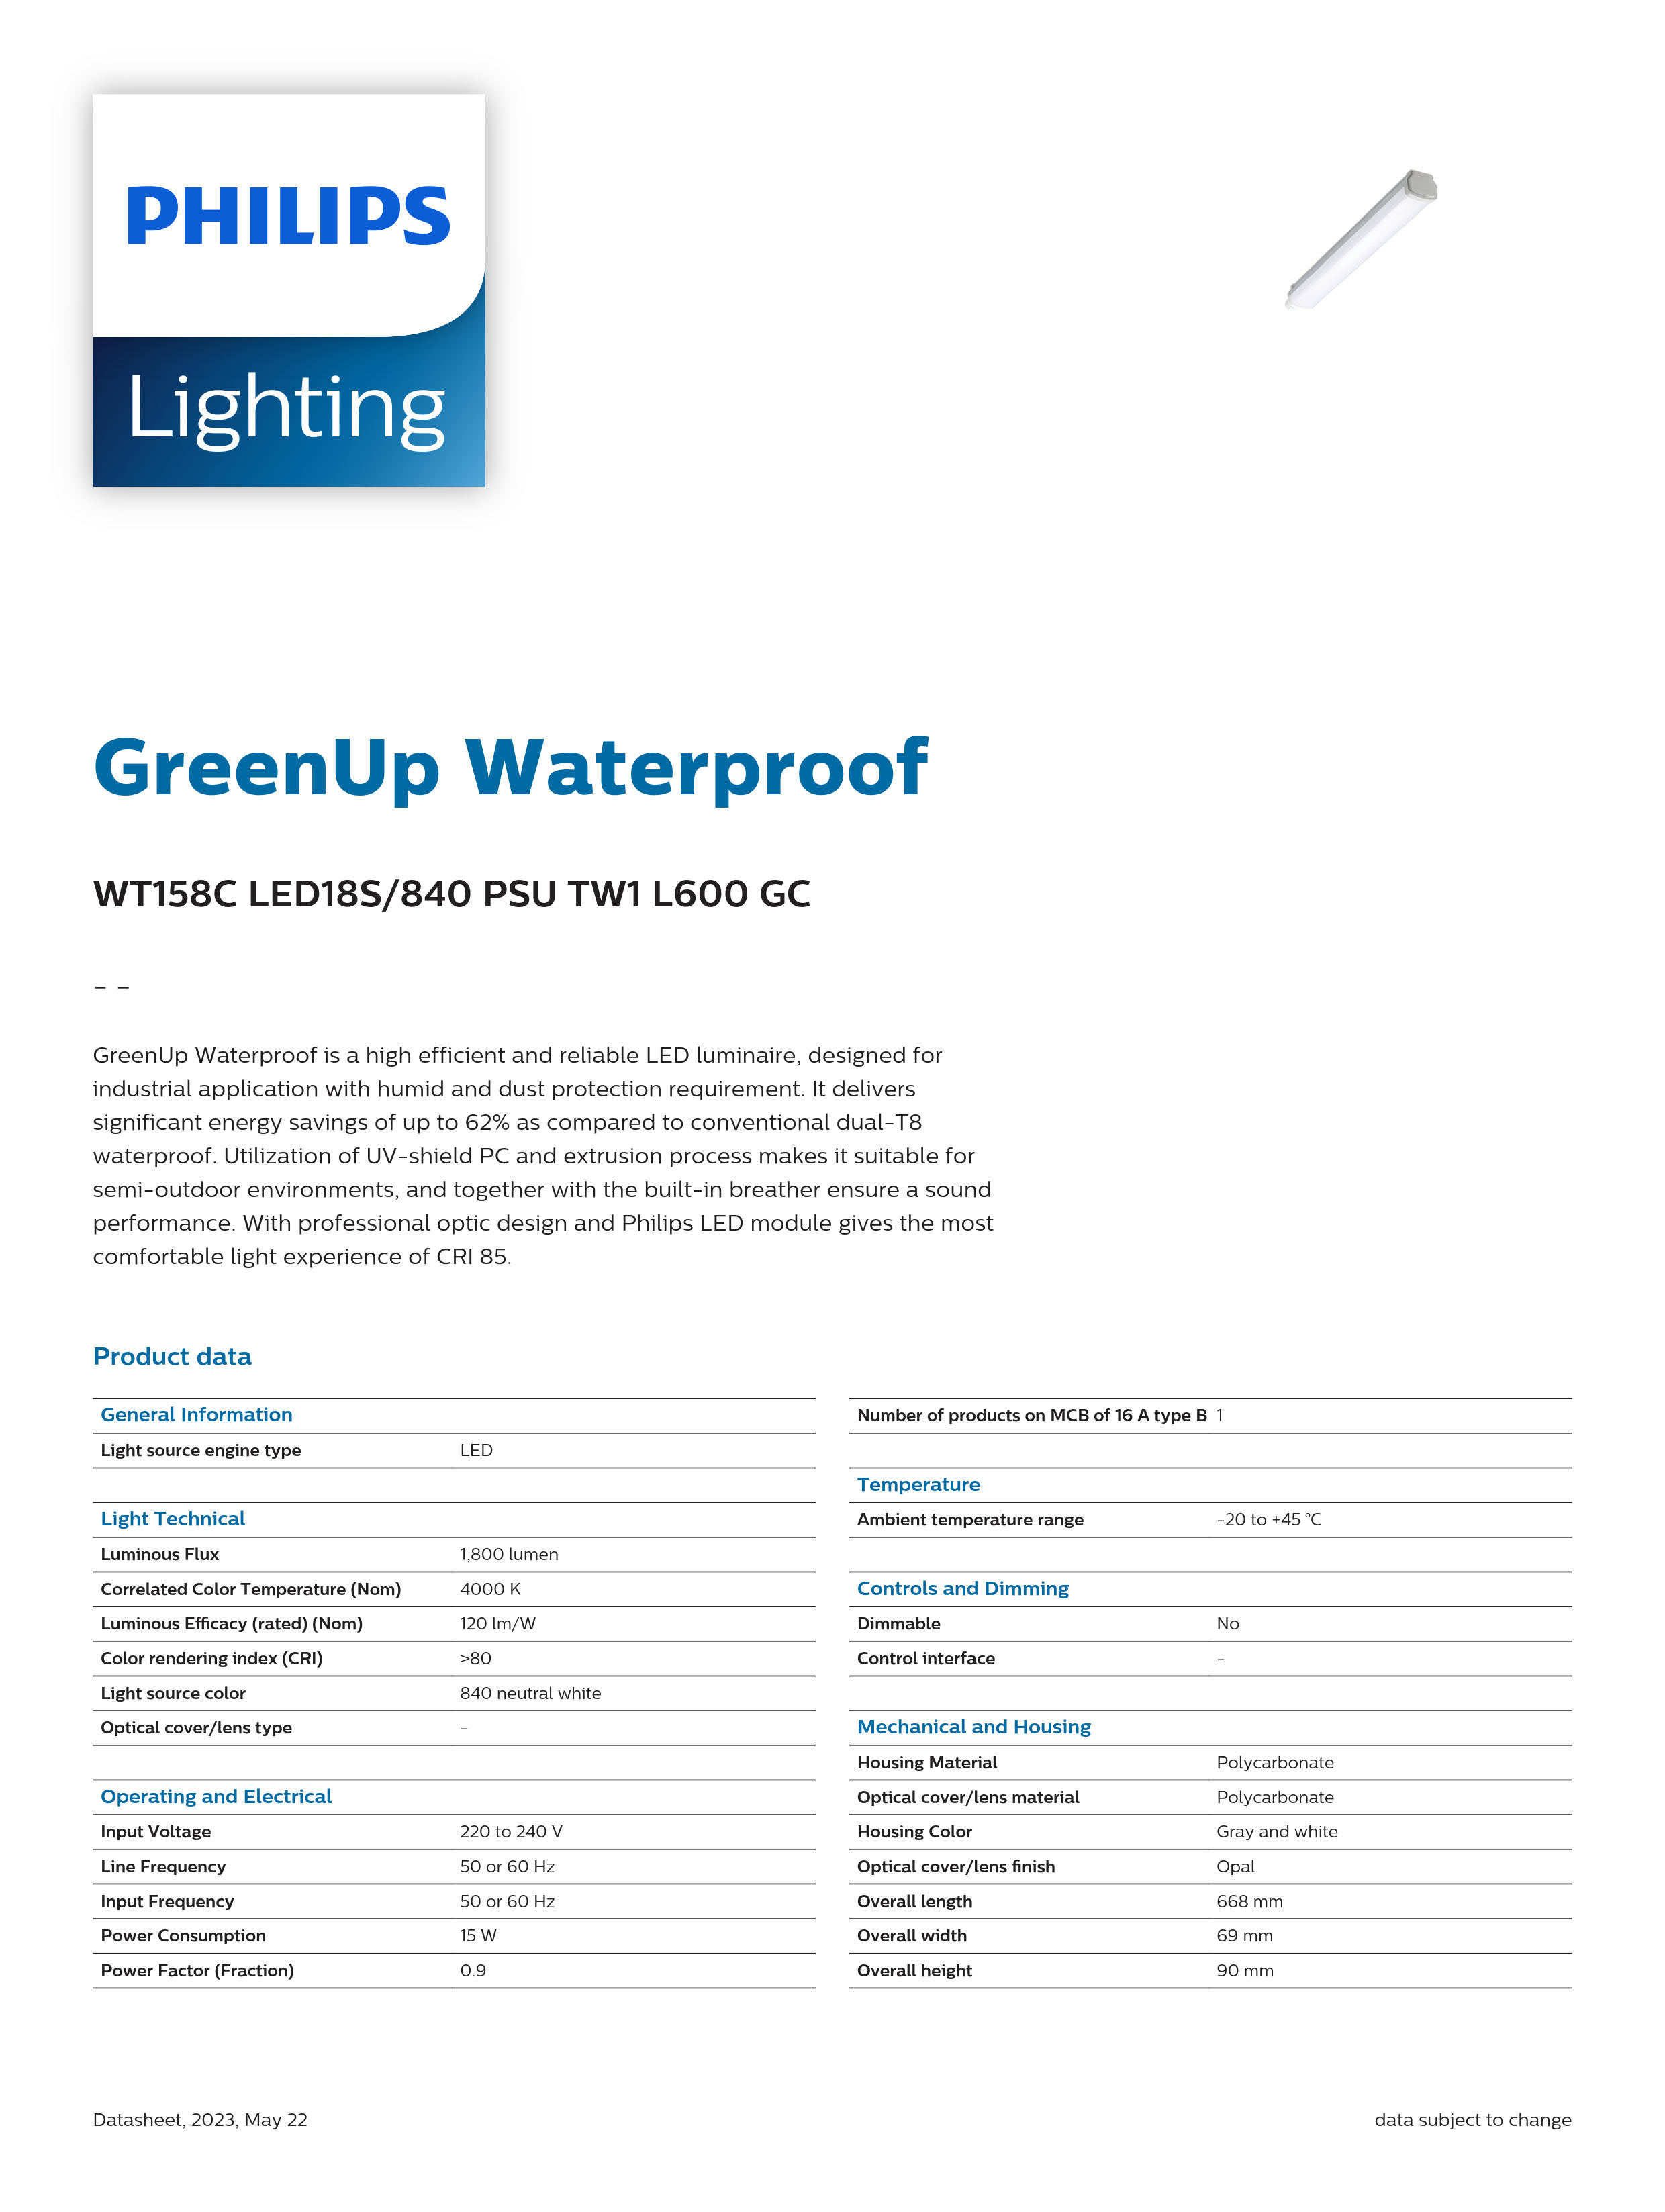 PHILIPS Waterproof WT158C LED18S/840 PSU TW1 L600 GC 911401894080